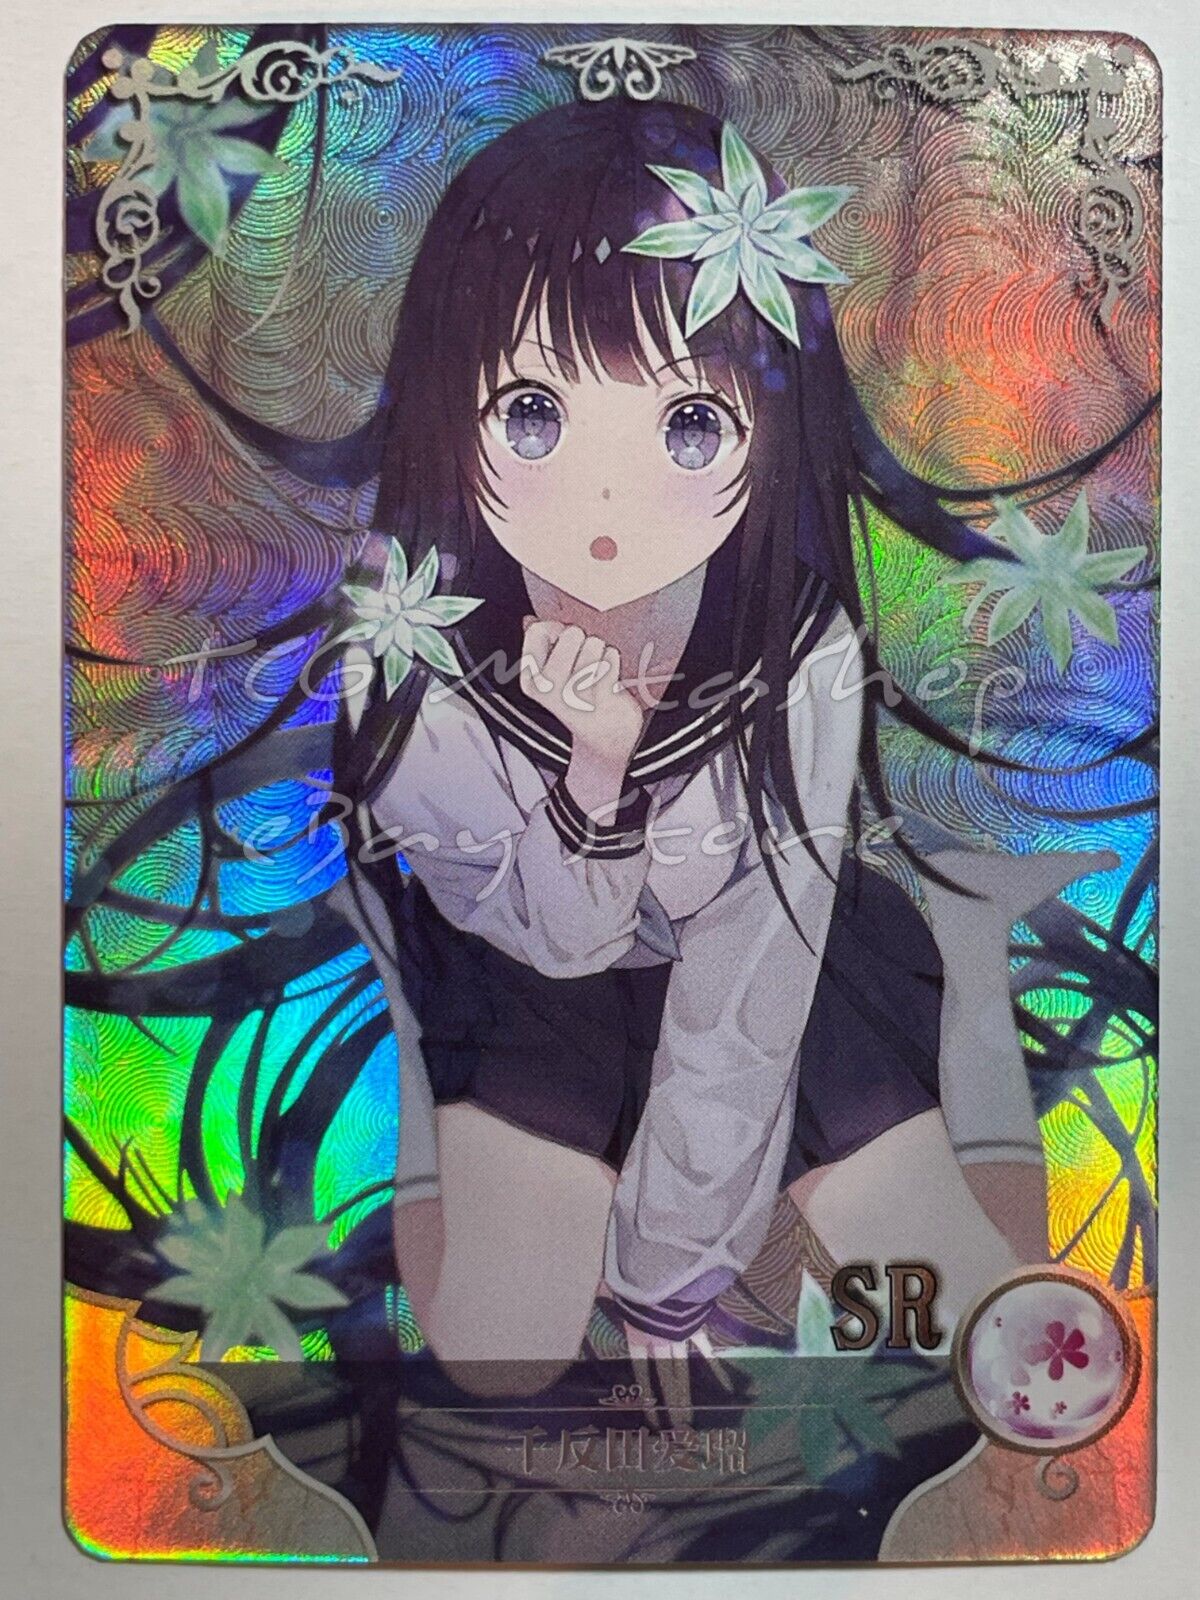 🔥 2m01 [Pick Your Singles PTR SSR SR] Goddess Story Waifu Anime Doujin Cards 🔥